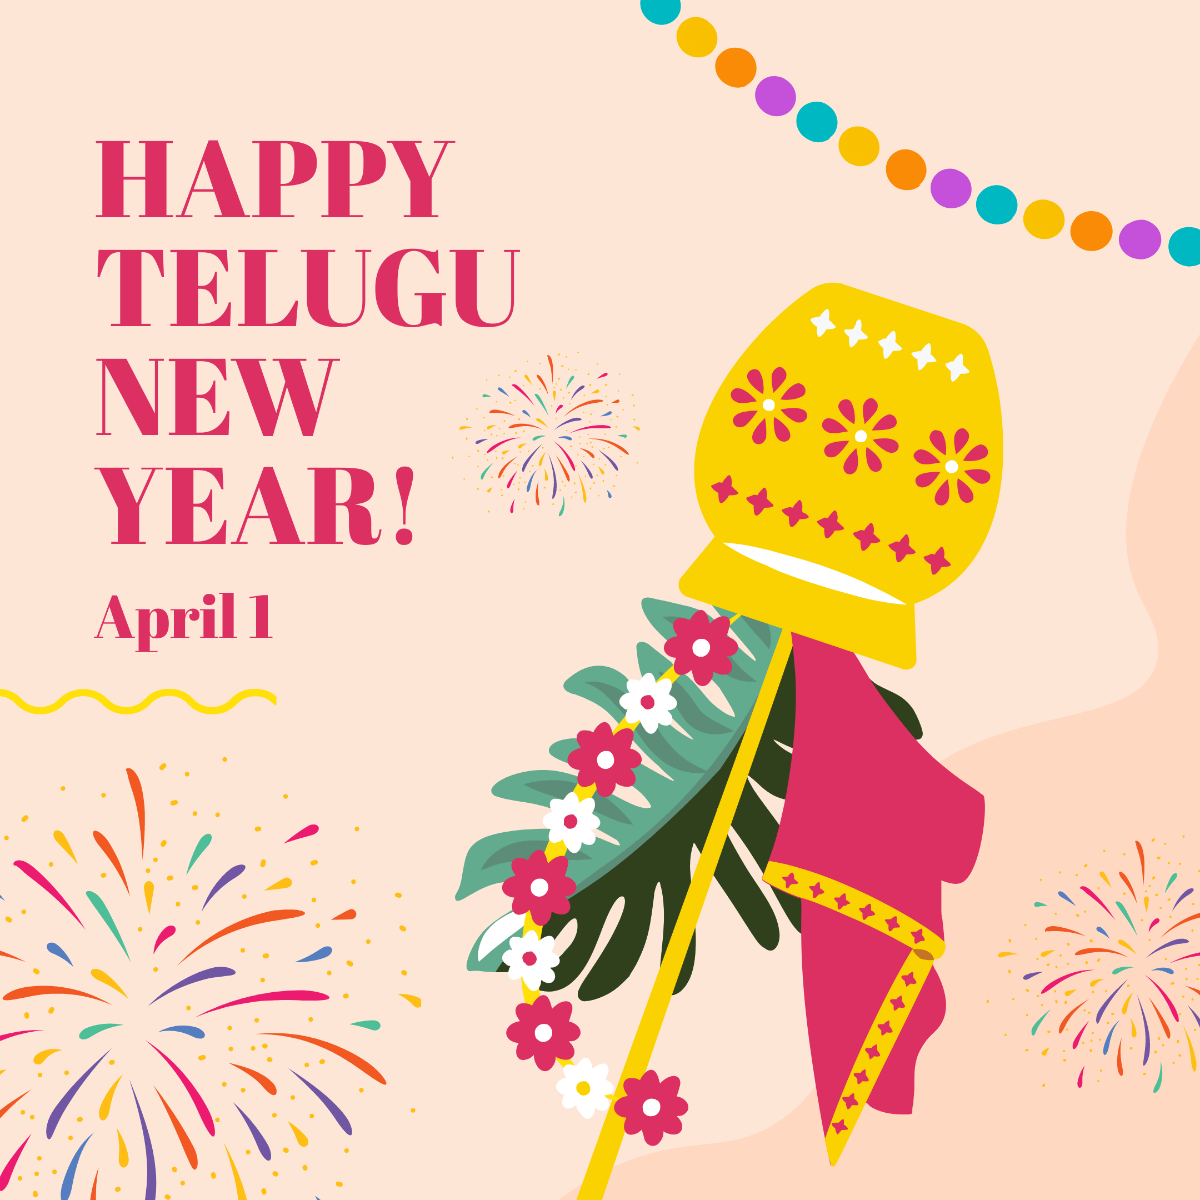 Happy Telugu New Year Instagram Post Template